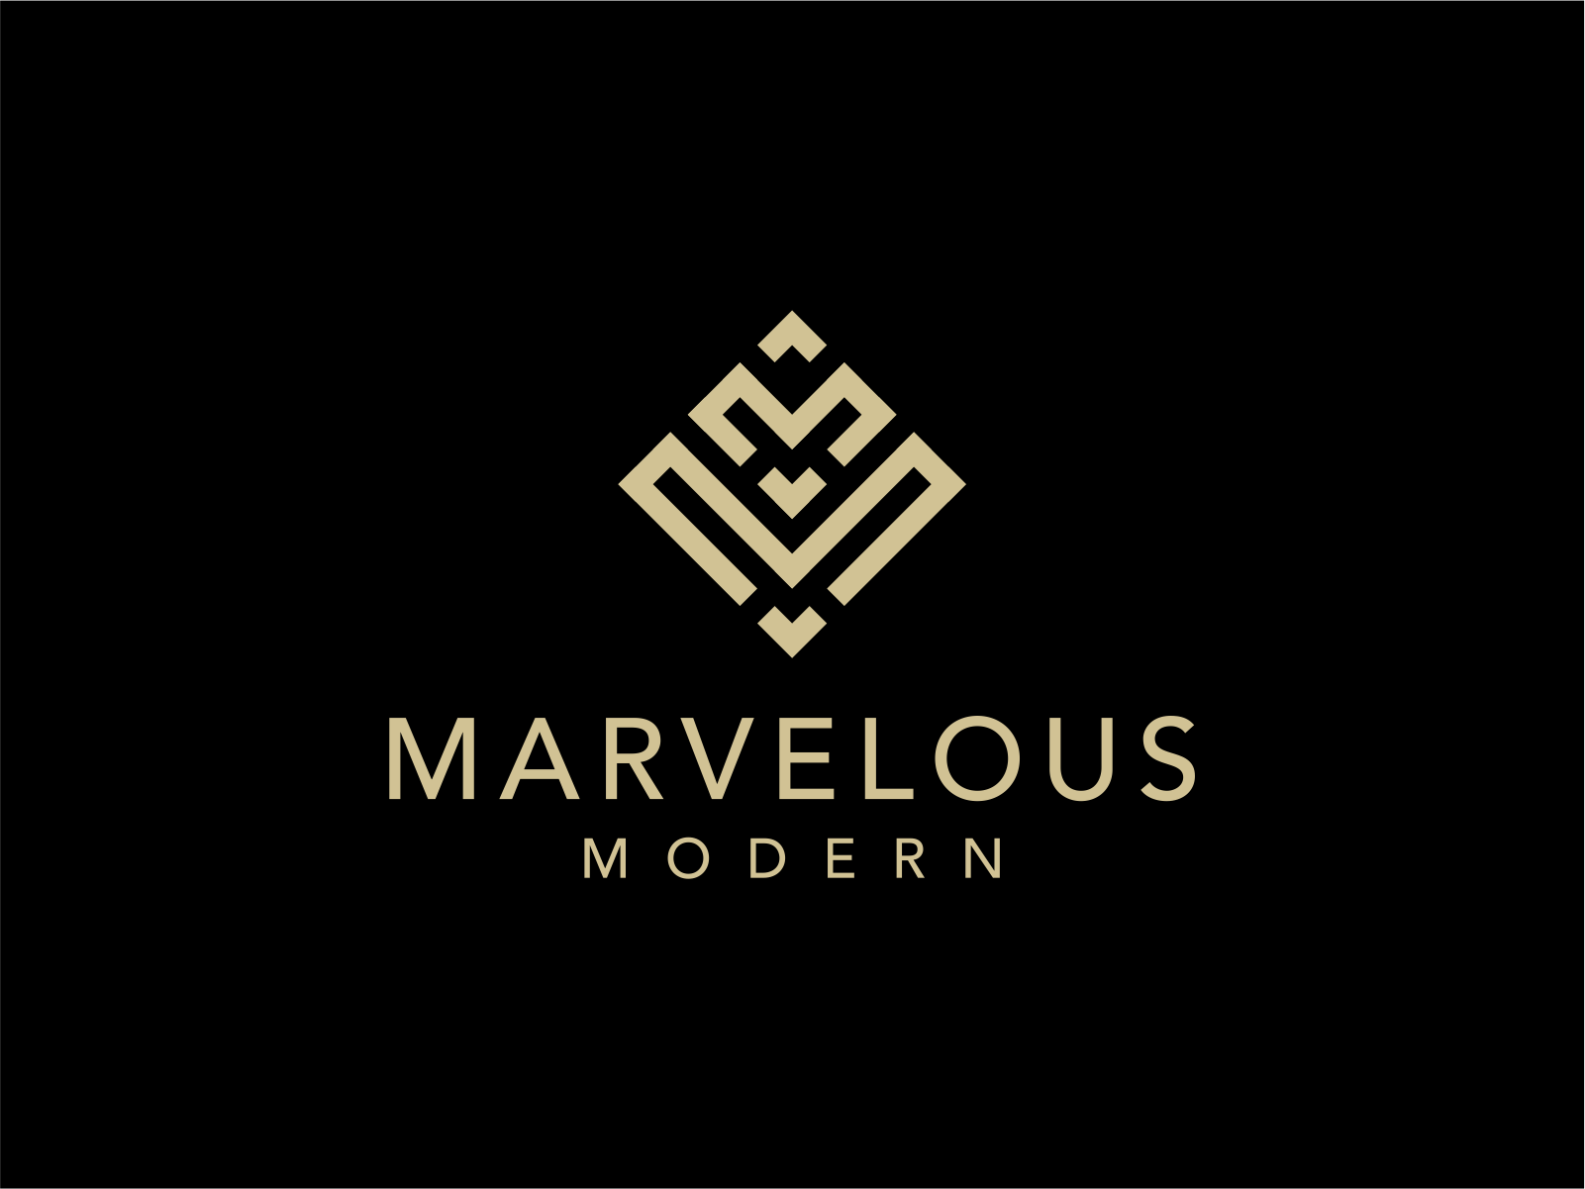 Marvelous modern by Bagiendo on Dribbble